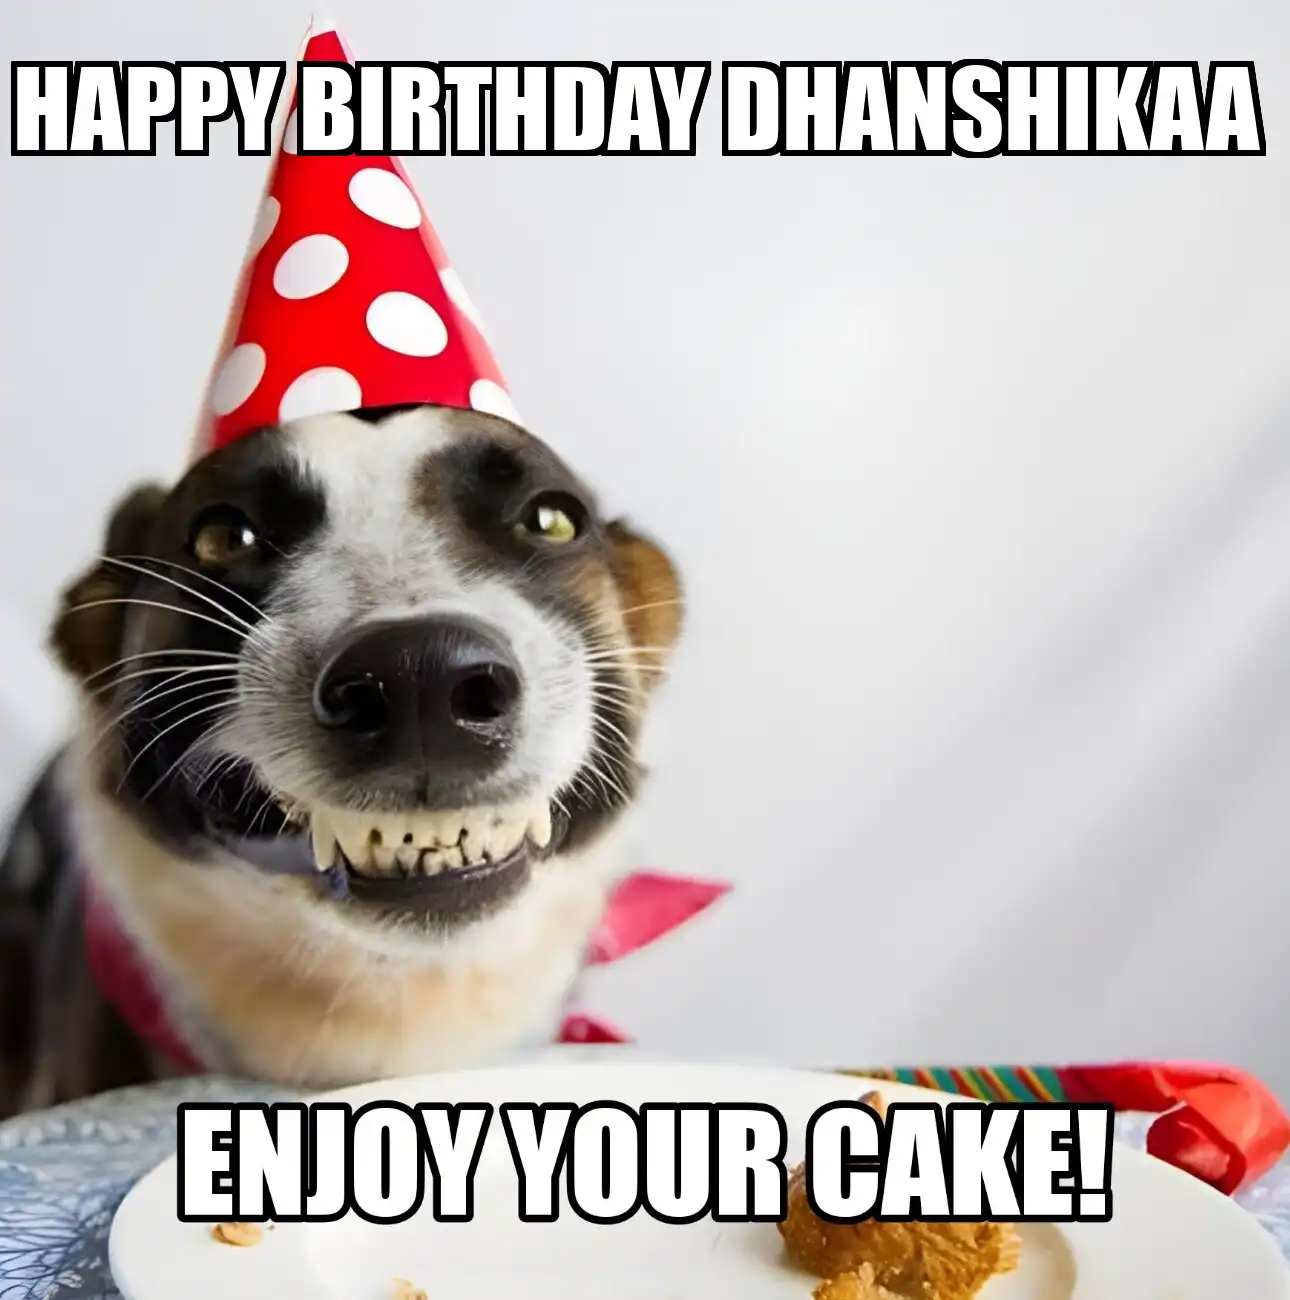 Happy Birthday Dhanshikaa Enjoy Your Cake Dog Meme